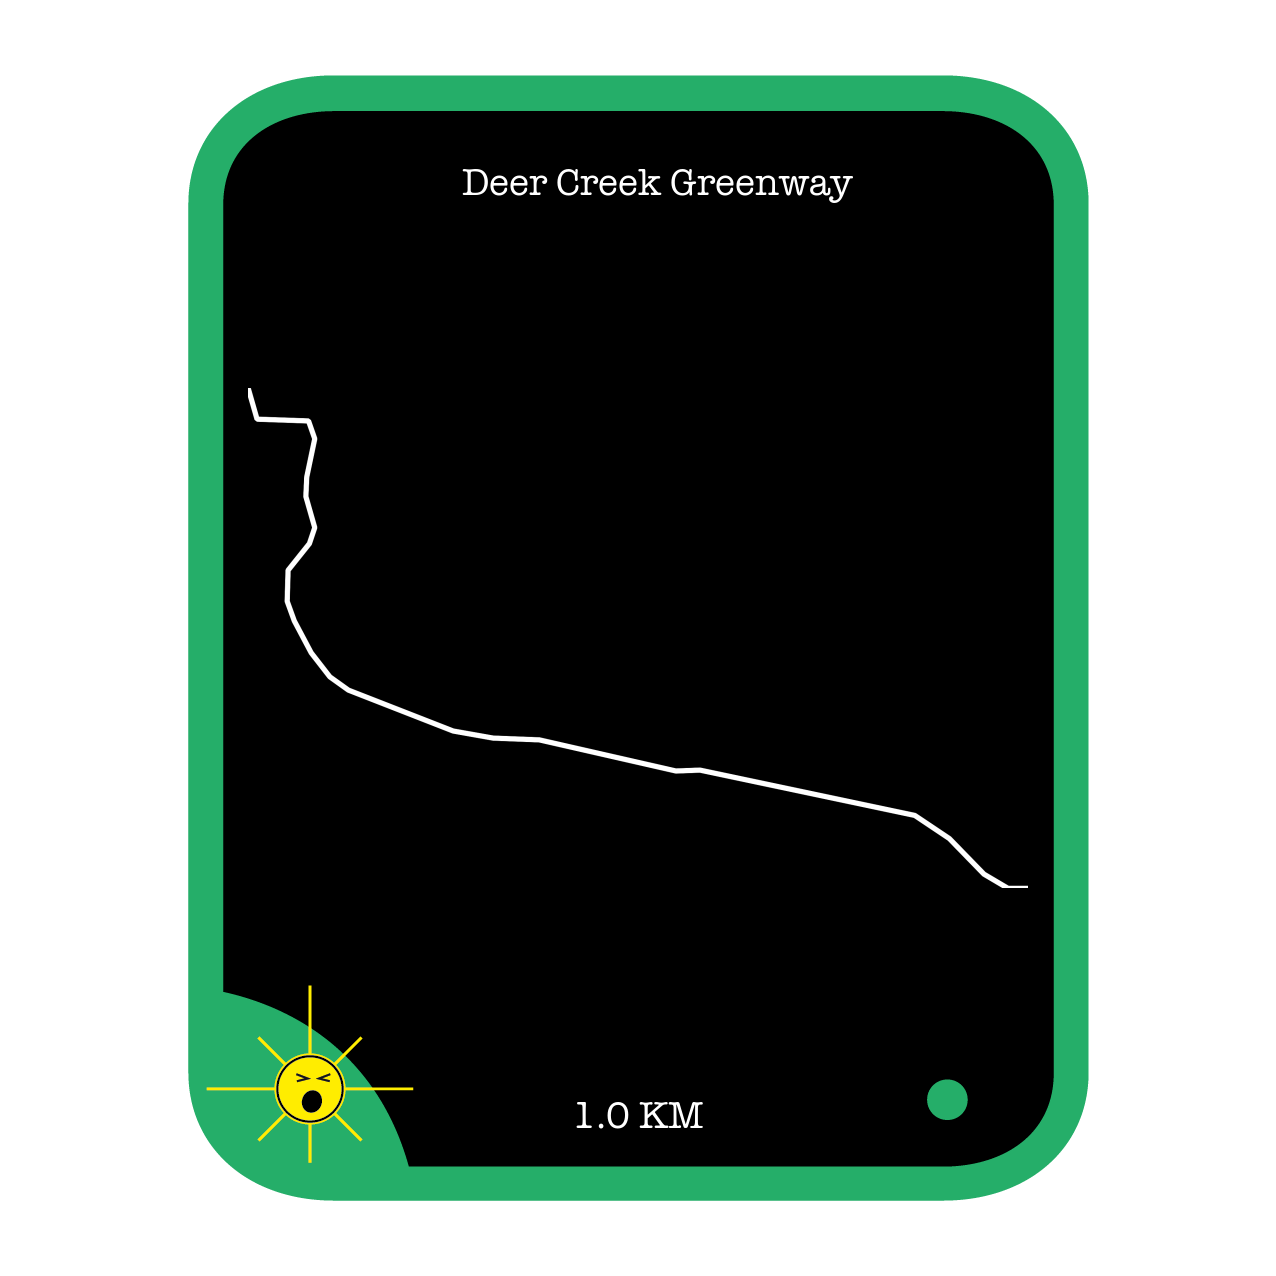 Deer Creek Greenway